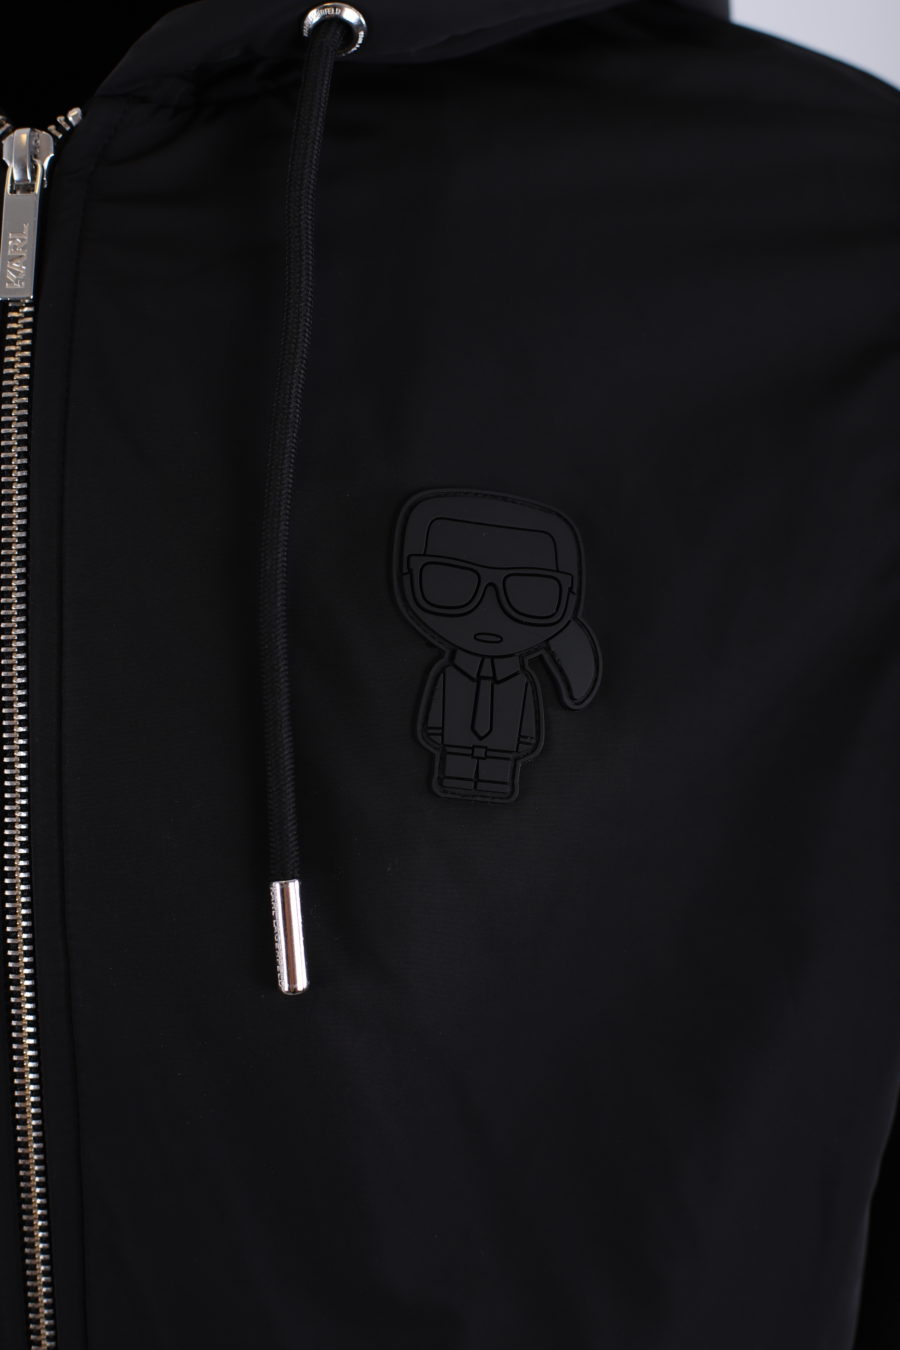 Chaqueta negra con capucha impermeable mix con logo engomado "Karl" - IMG 9183